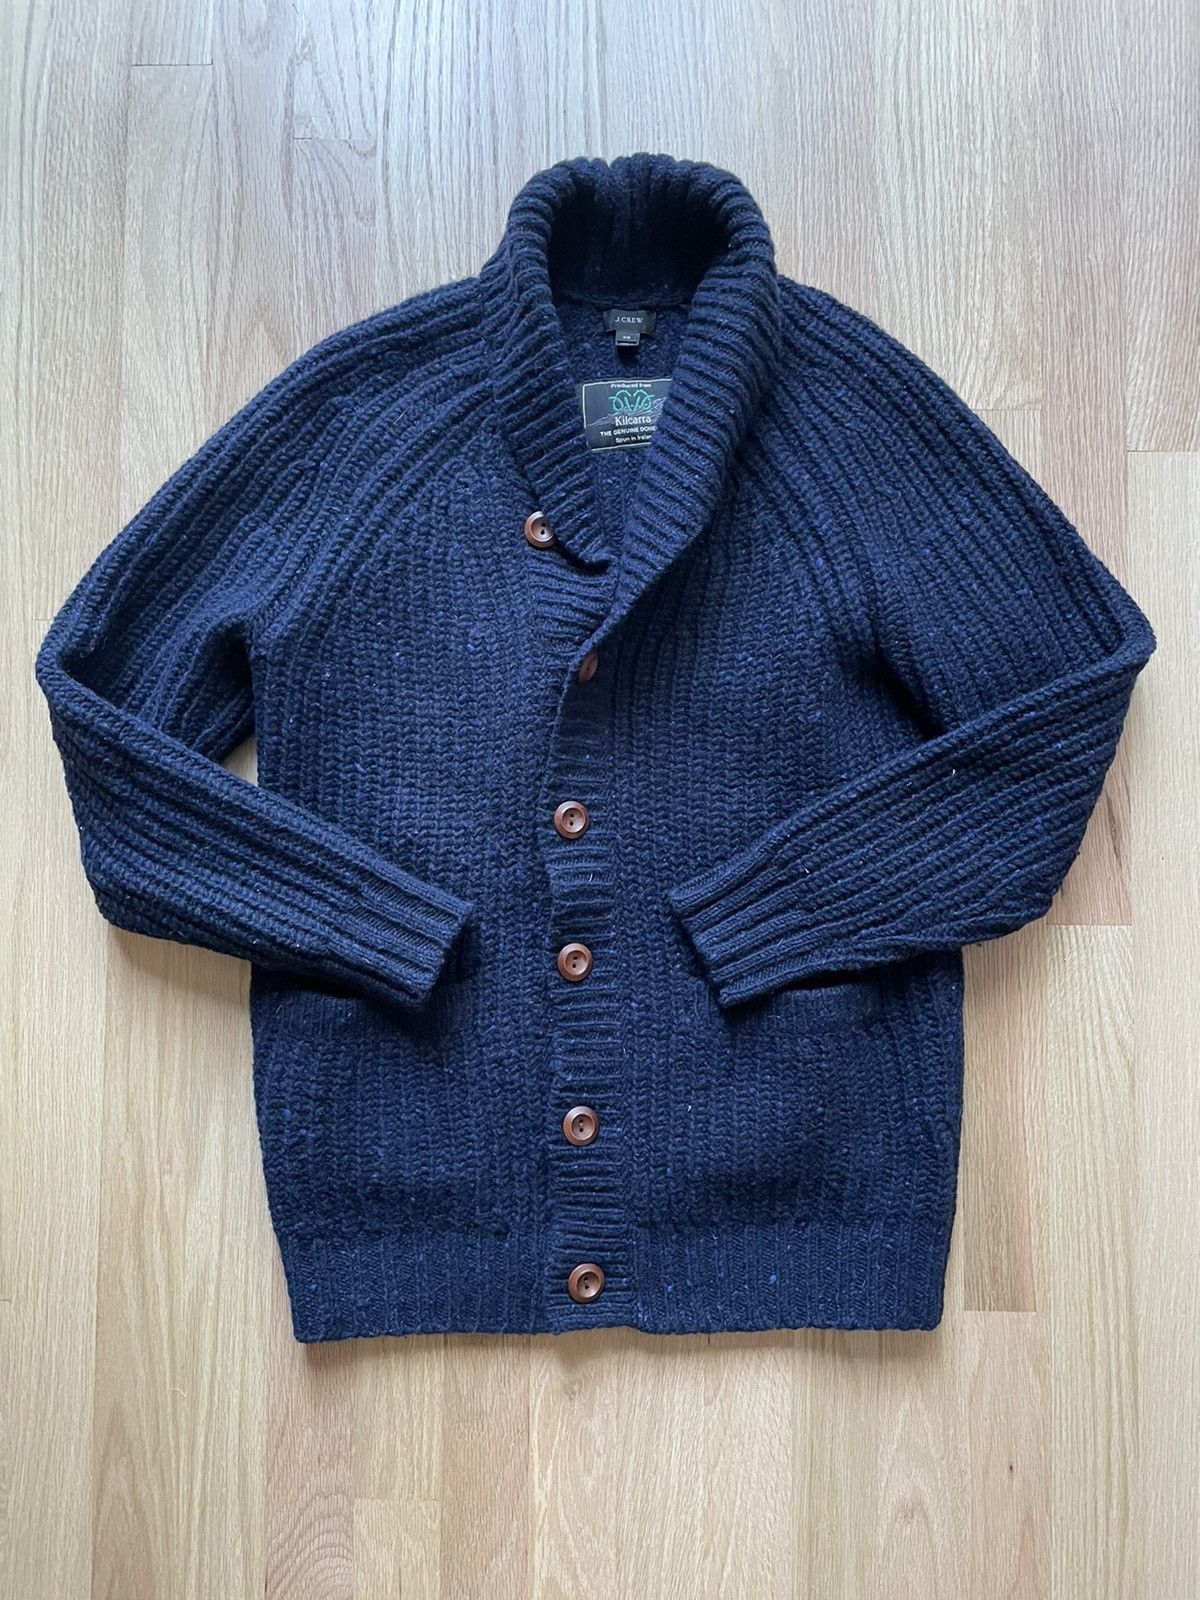 J.CREW×Kilcarra Donegal Shawl Sweater XS - rentrastockholm.se